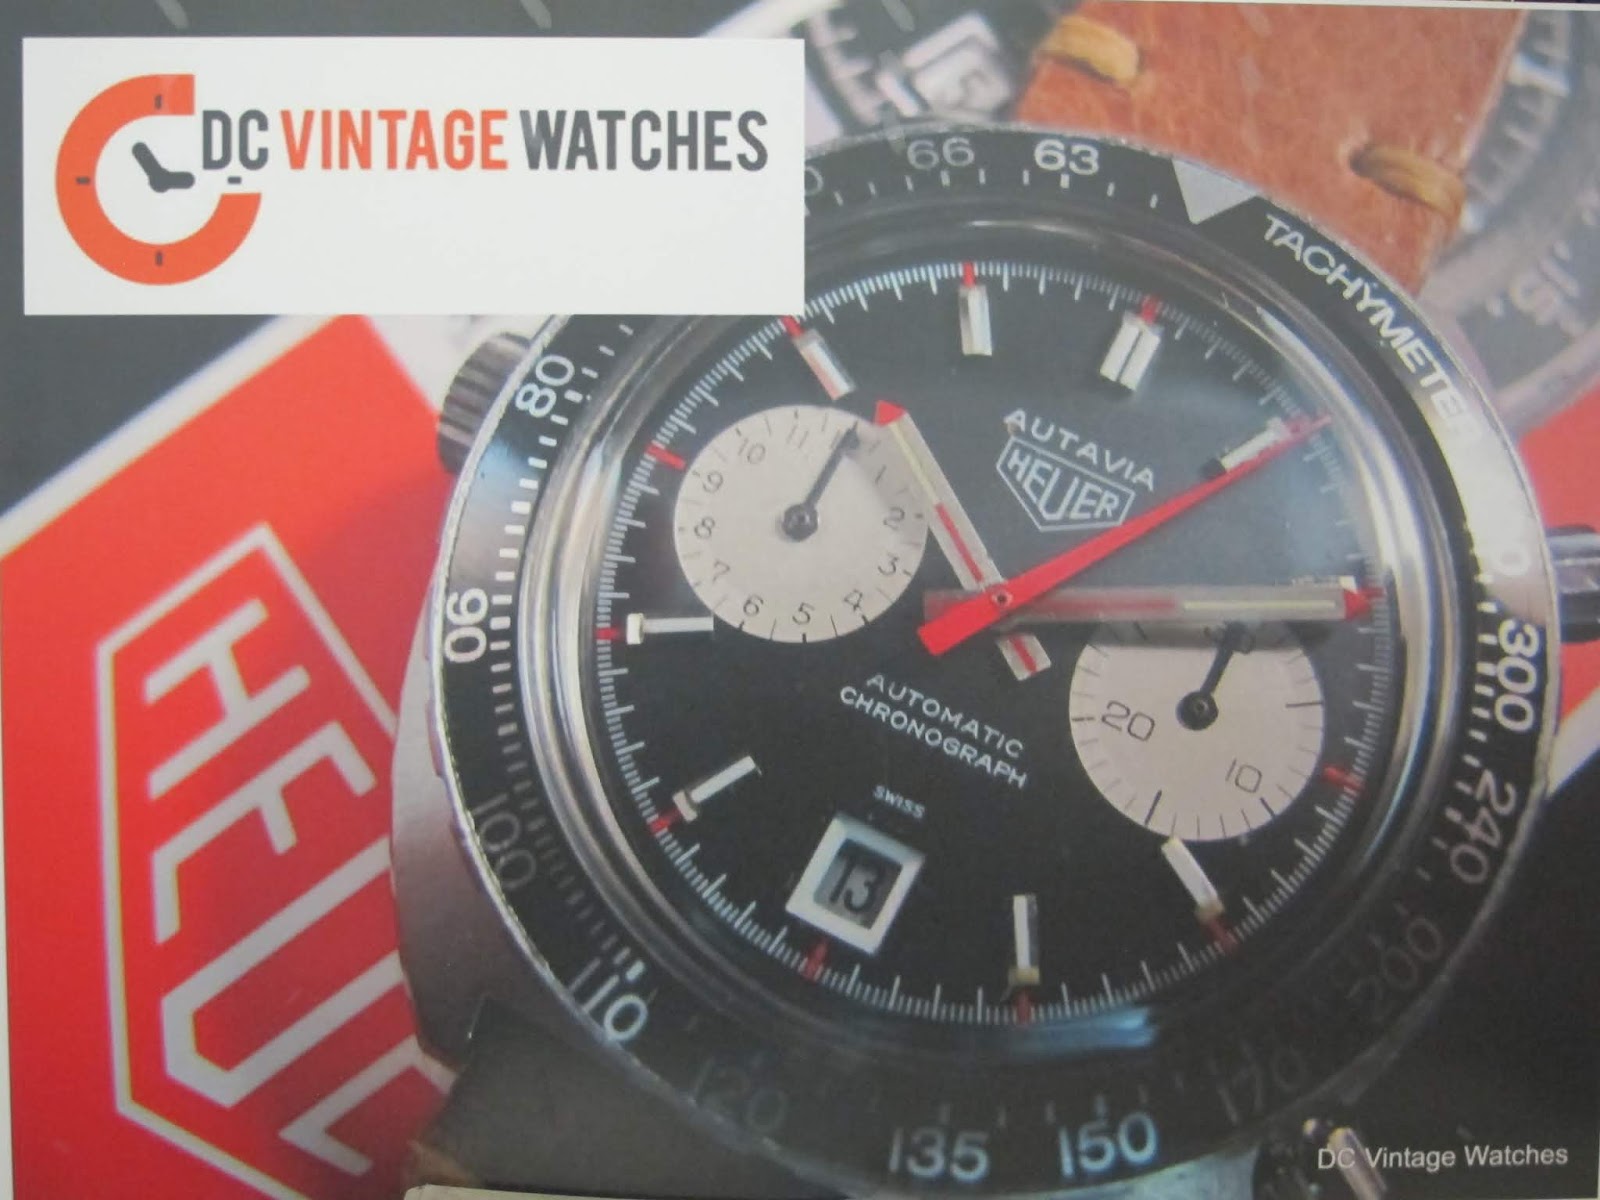 Interview: DC Vintage Watches